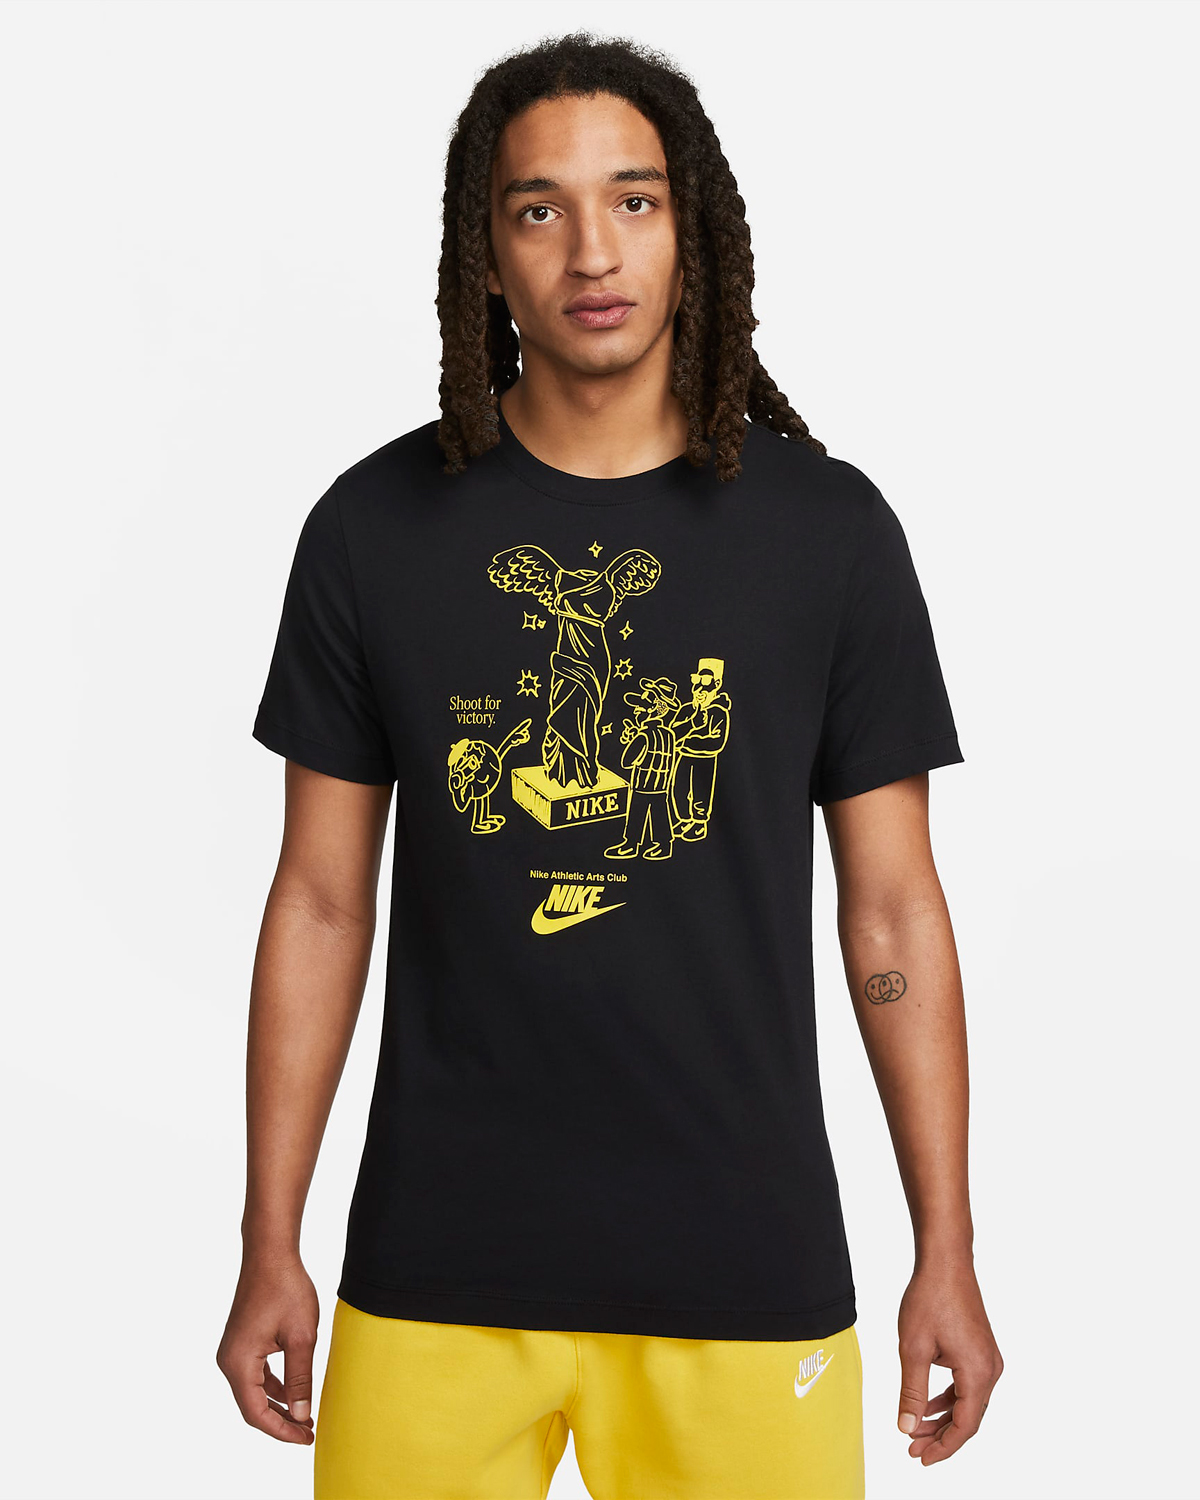 Nike-Sportswear-T-Shirt-Black-Opti-Yellow